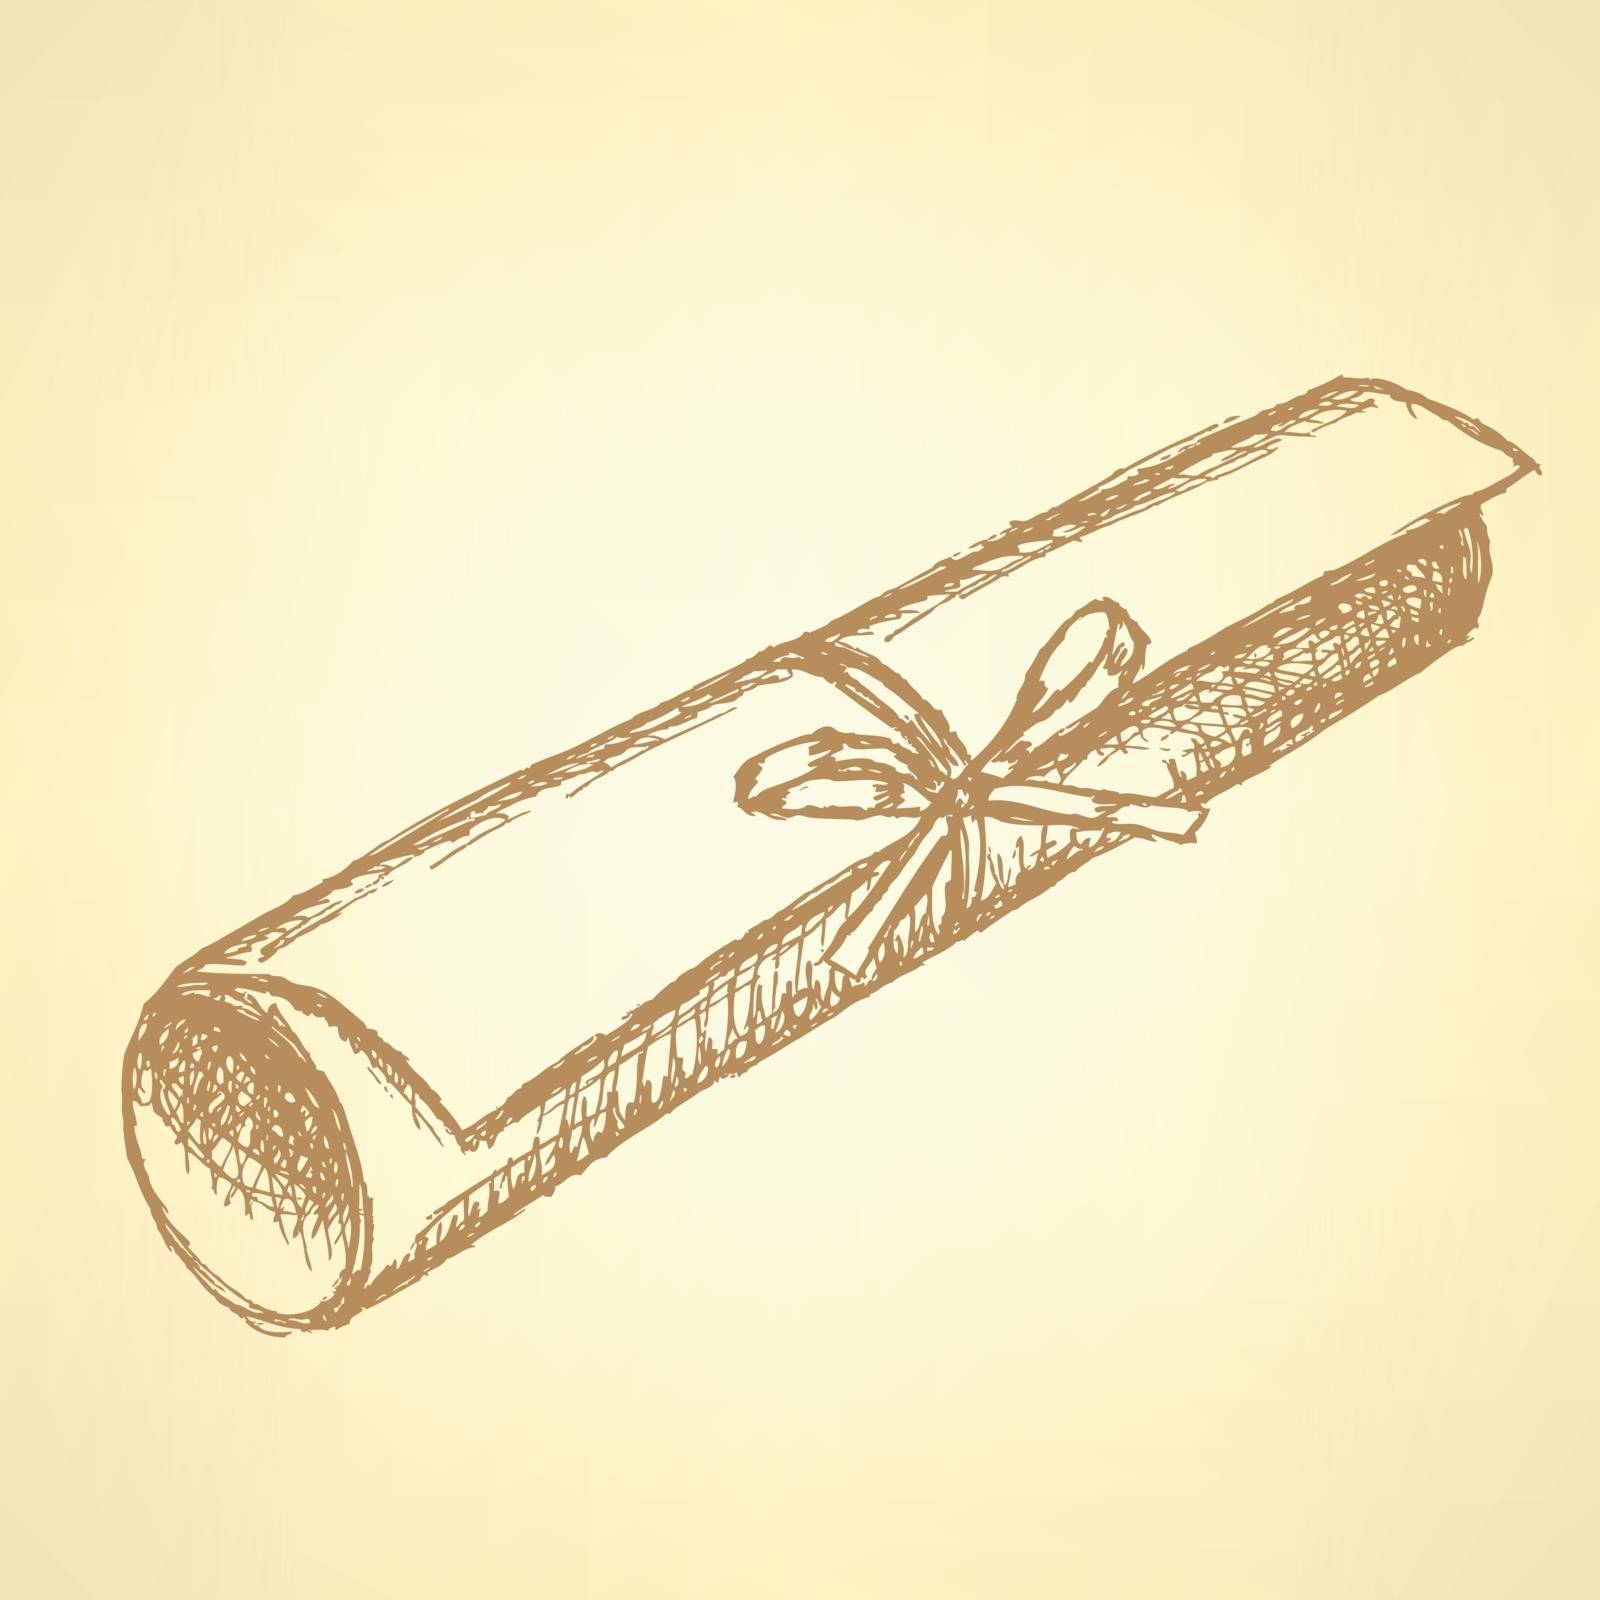 Sketch graduation diploma scroll  by KaLi